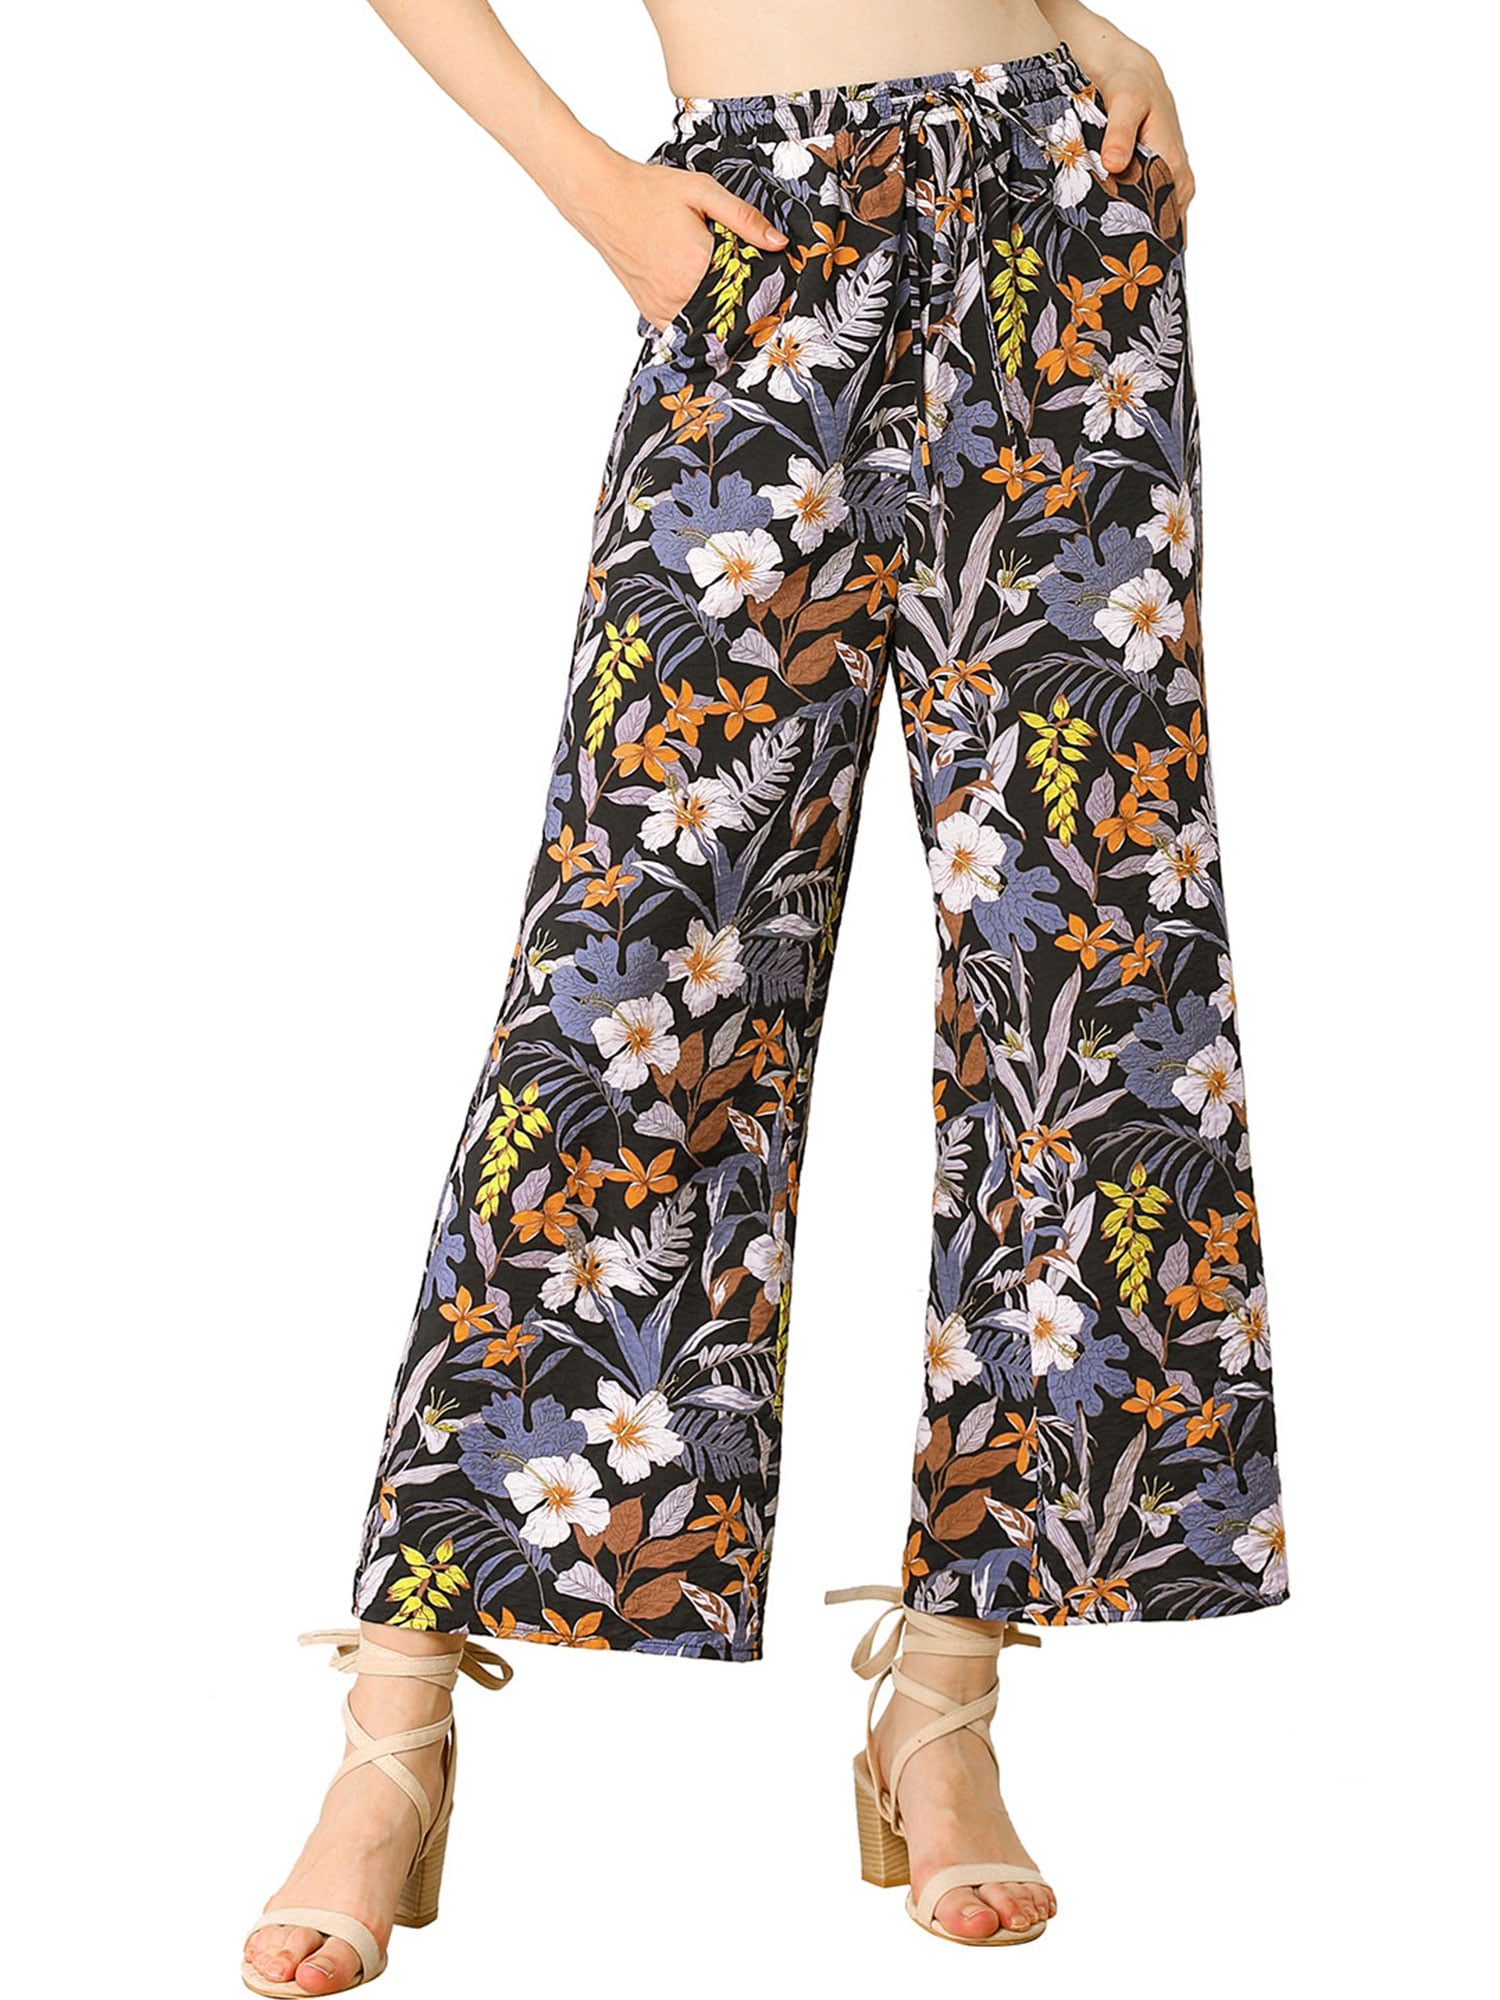 Tsun Women Comfy Casual High Waist Long Pants Boho Floral Print Pants Wide Leg Pants Trousers